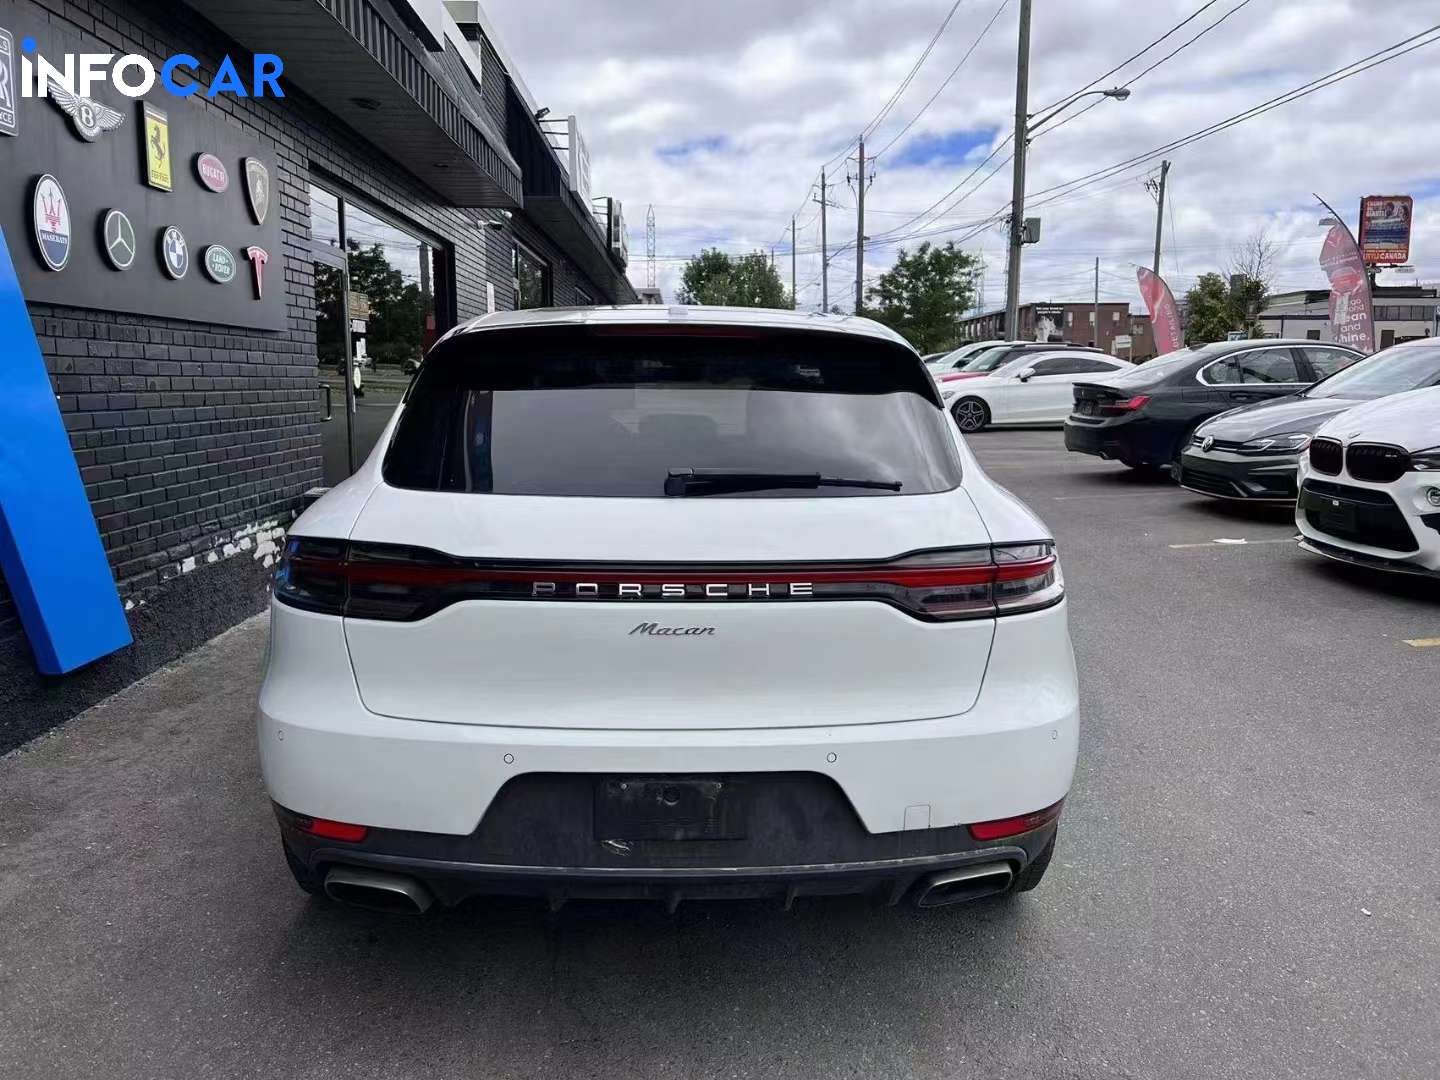 2019 Porsche Macan null - INFOCAR - Toronto Auto Trading Platform